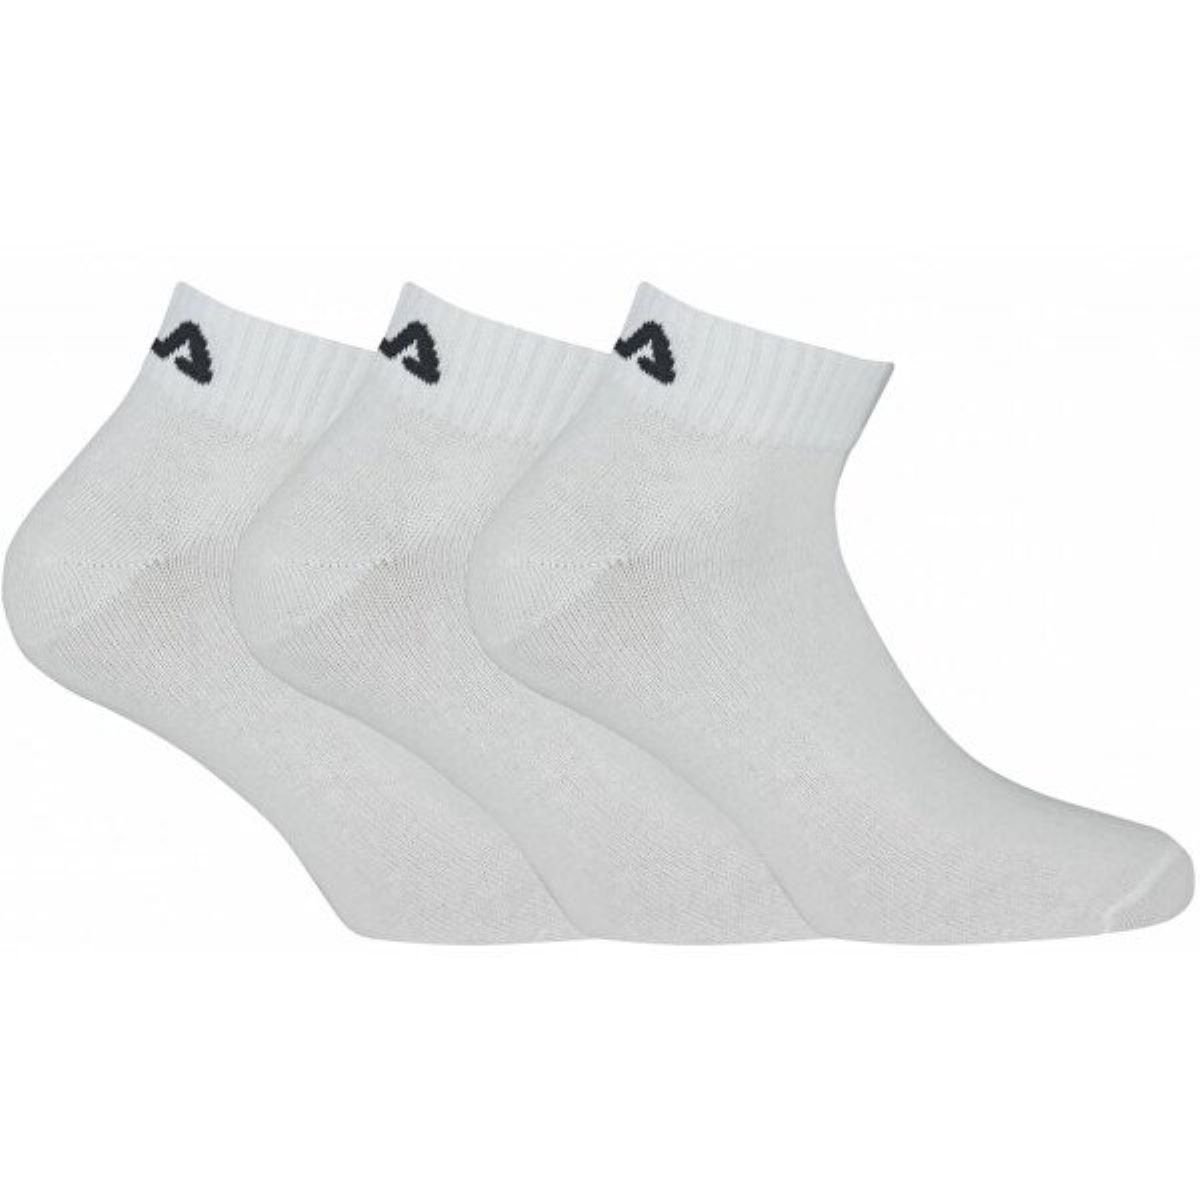 Ponožky Fila Quarter Plain 3 Pack Socks - biela